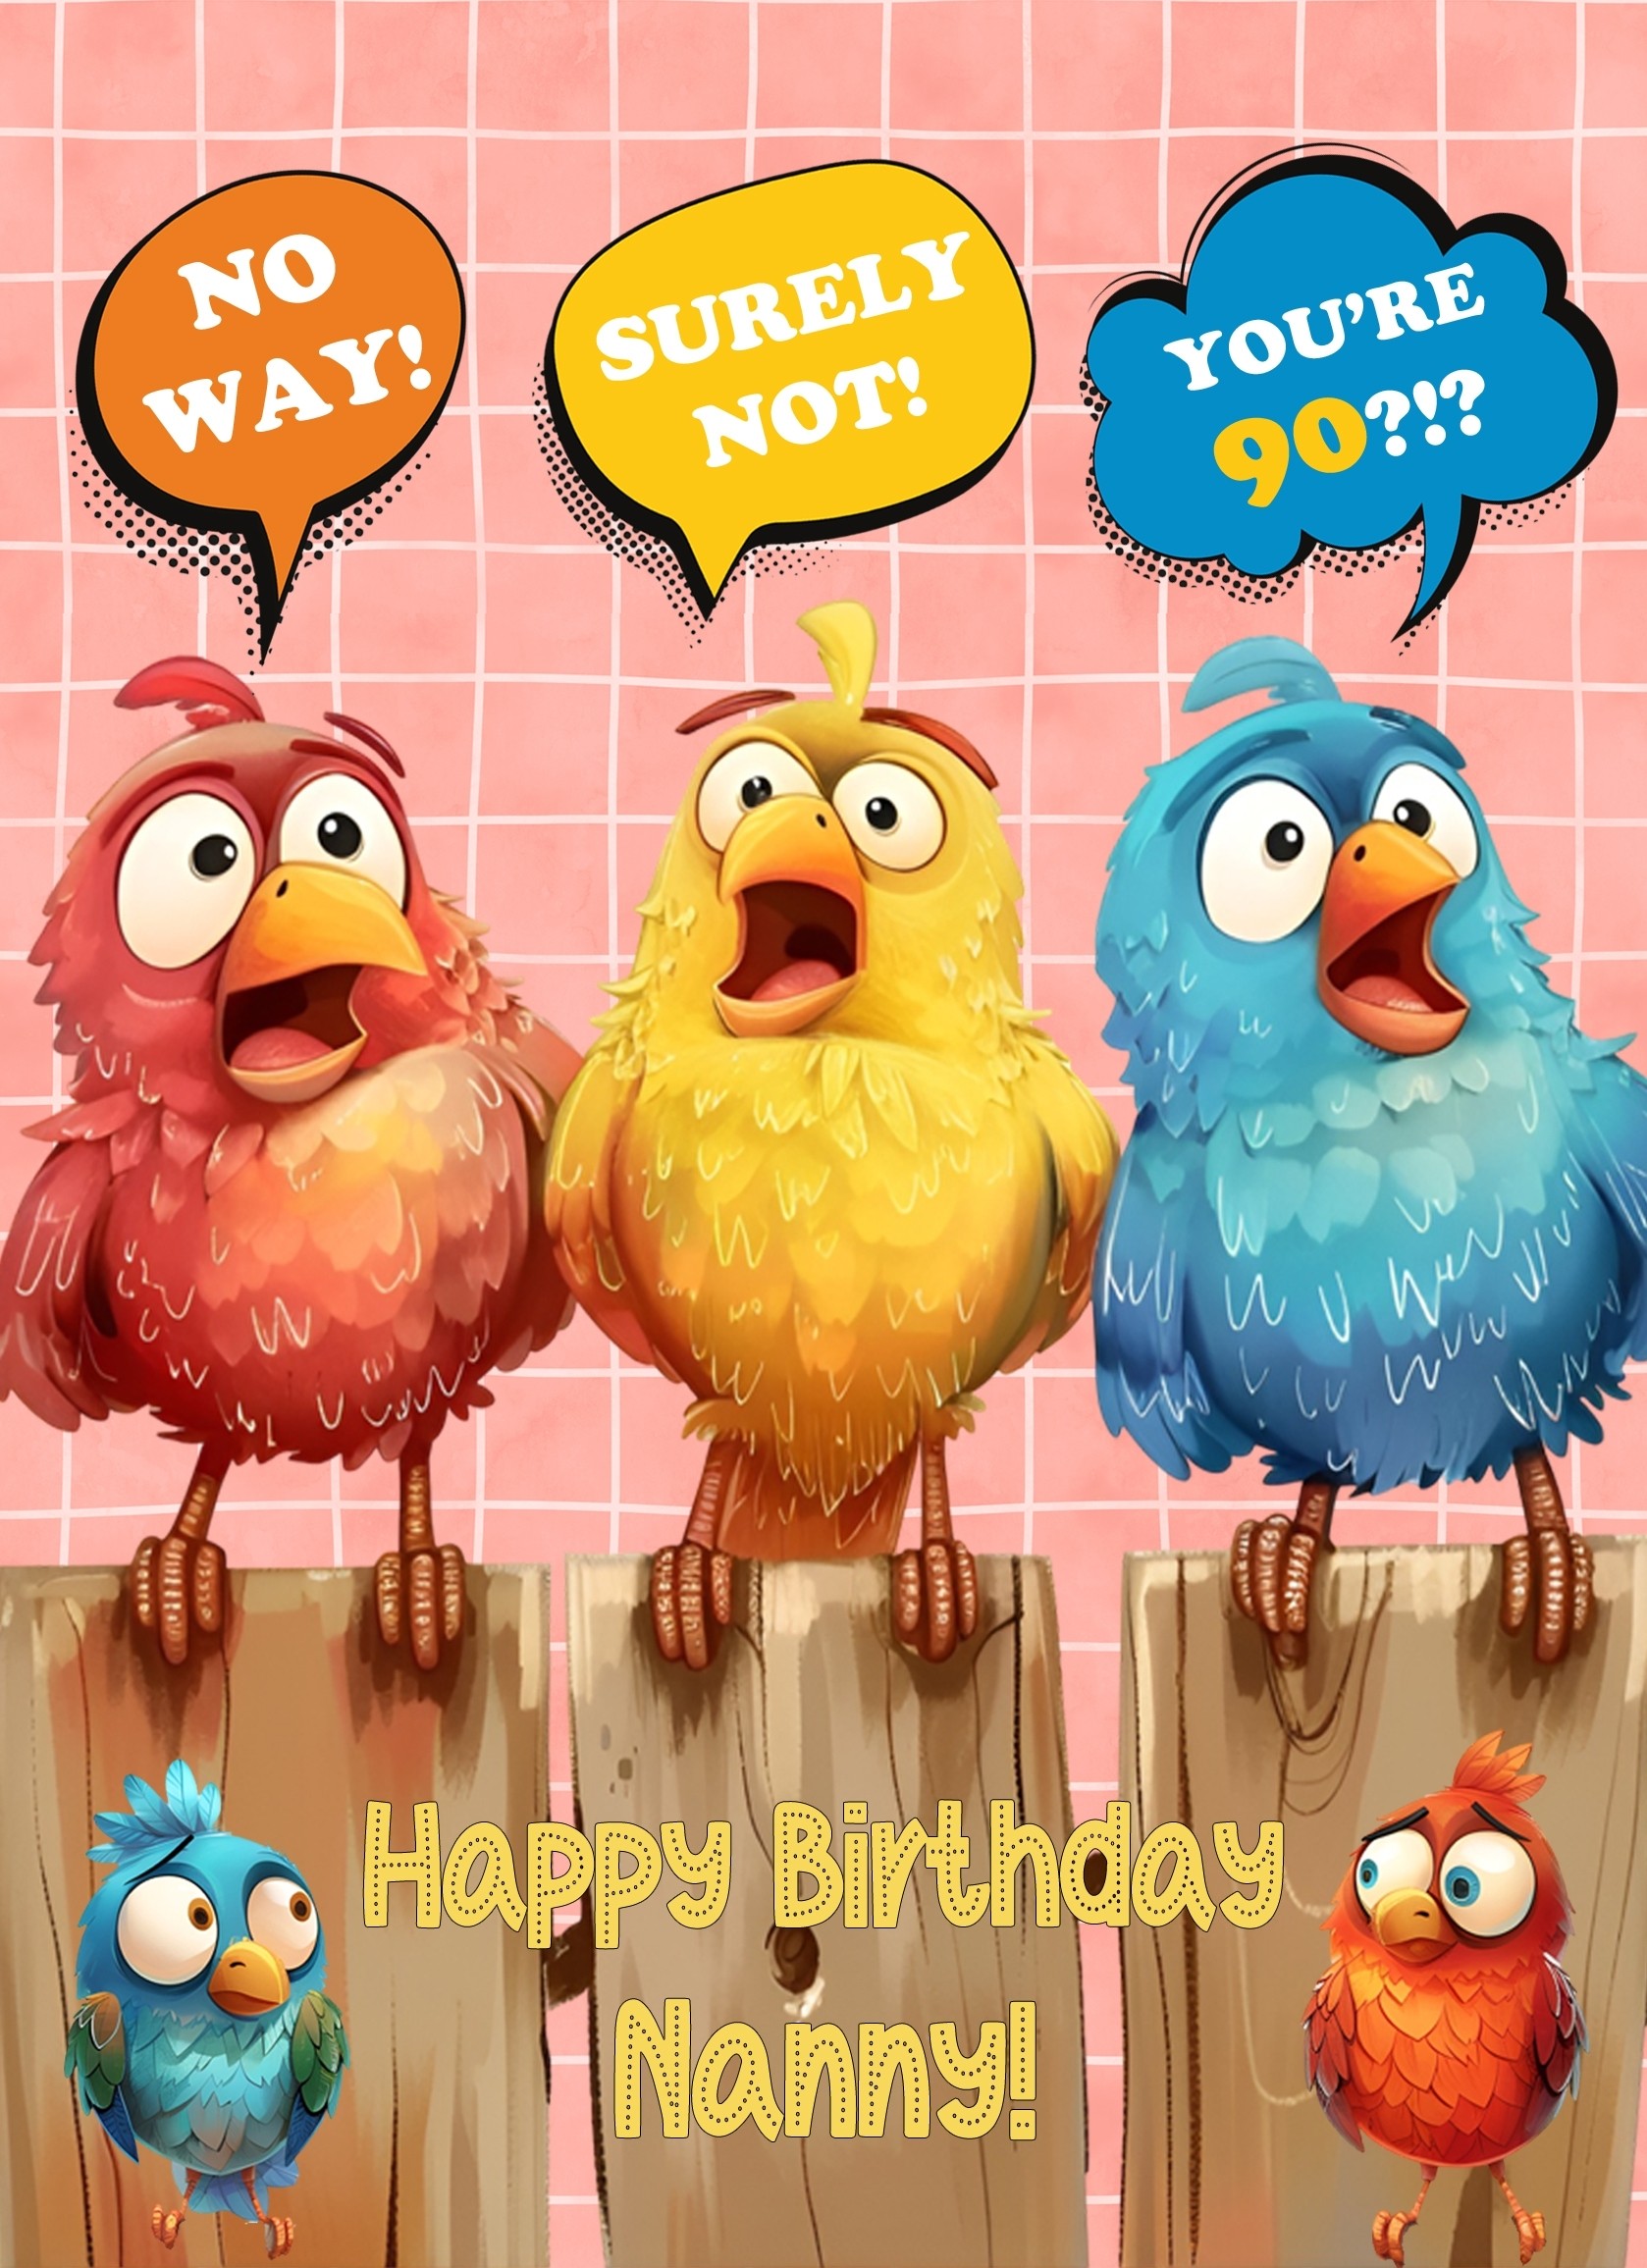 Nanny 90th Birthday Card (Funny Birds Surprised)